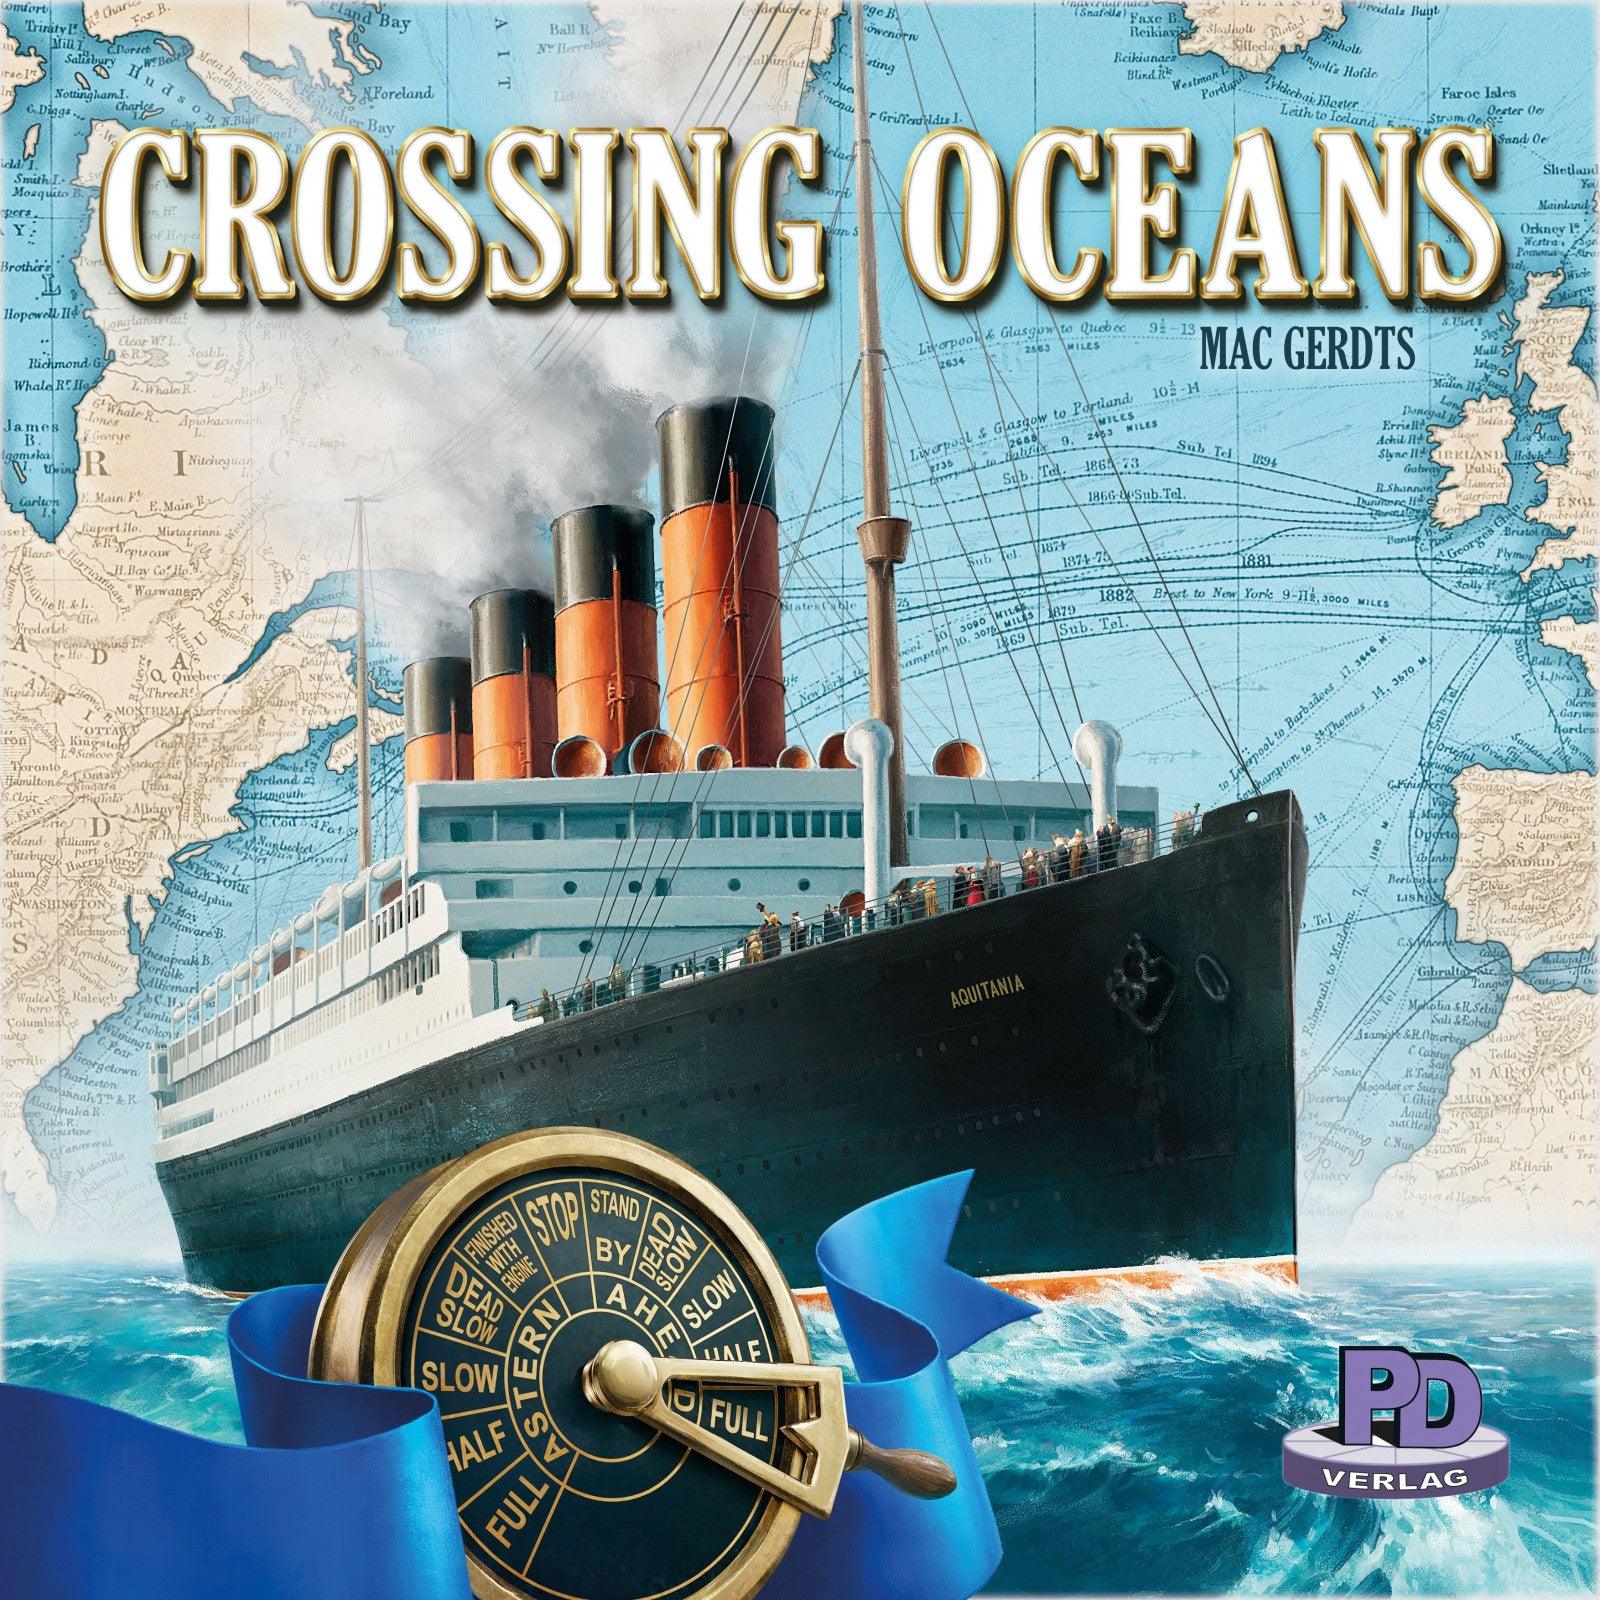 VR-103727 Crossing Oceans - Rio Grande - Titan Pop Culture